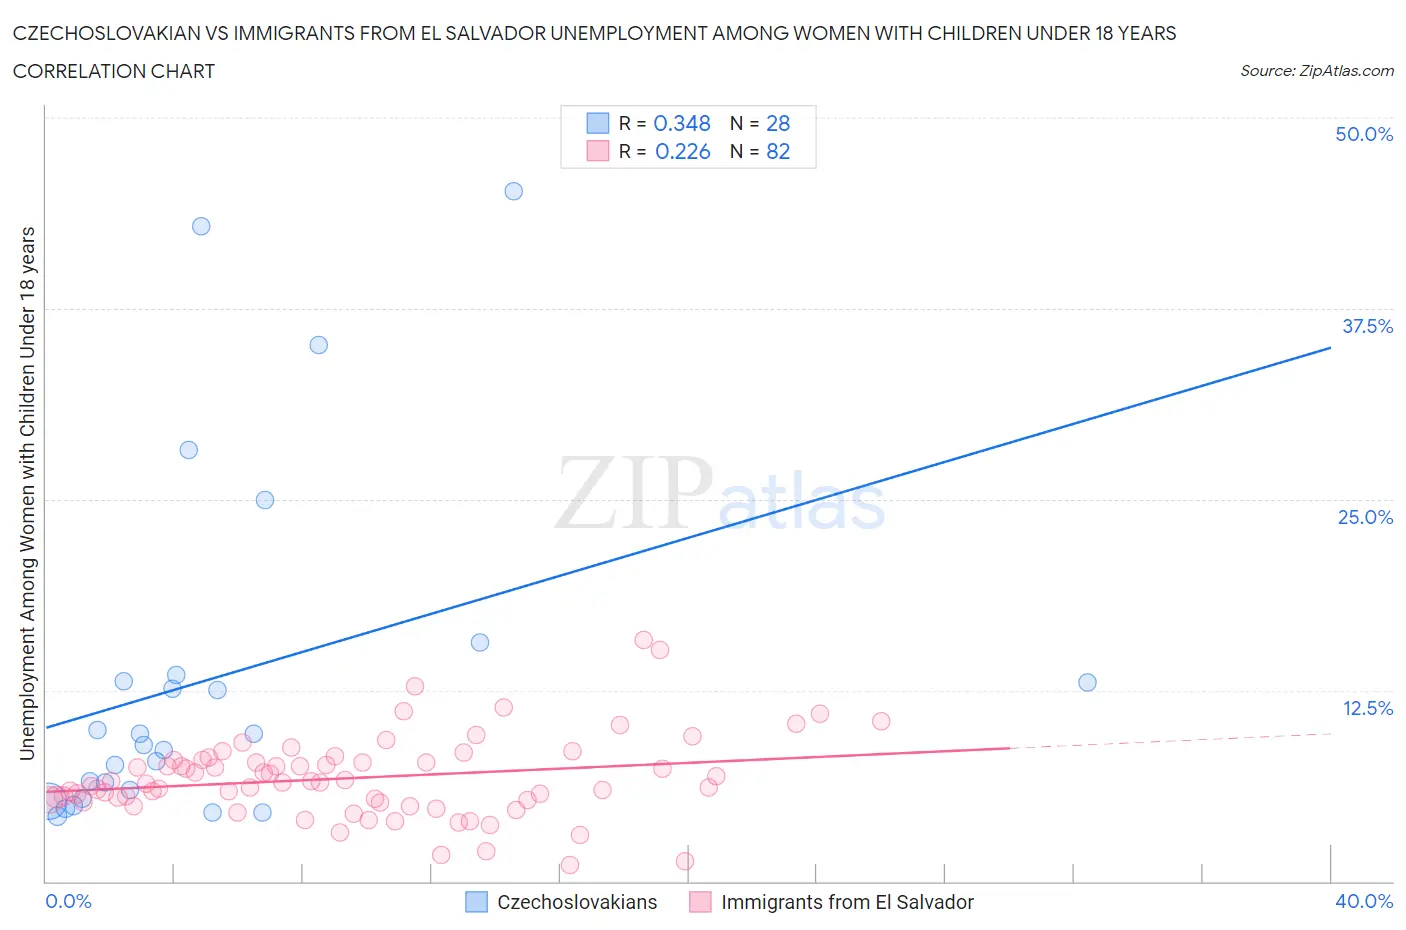 Czechoslovakian vs Immigrants from El Salvador Unemployment Among Women with Children Under 18 years